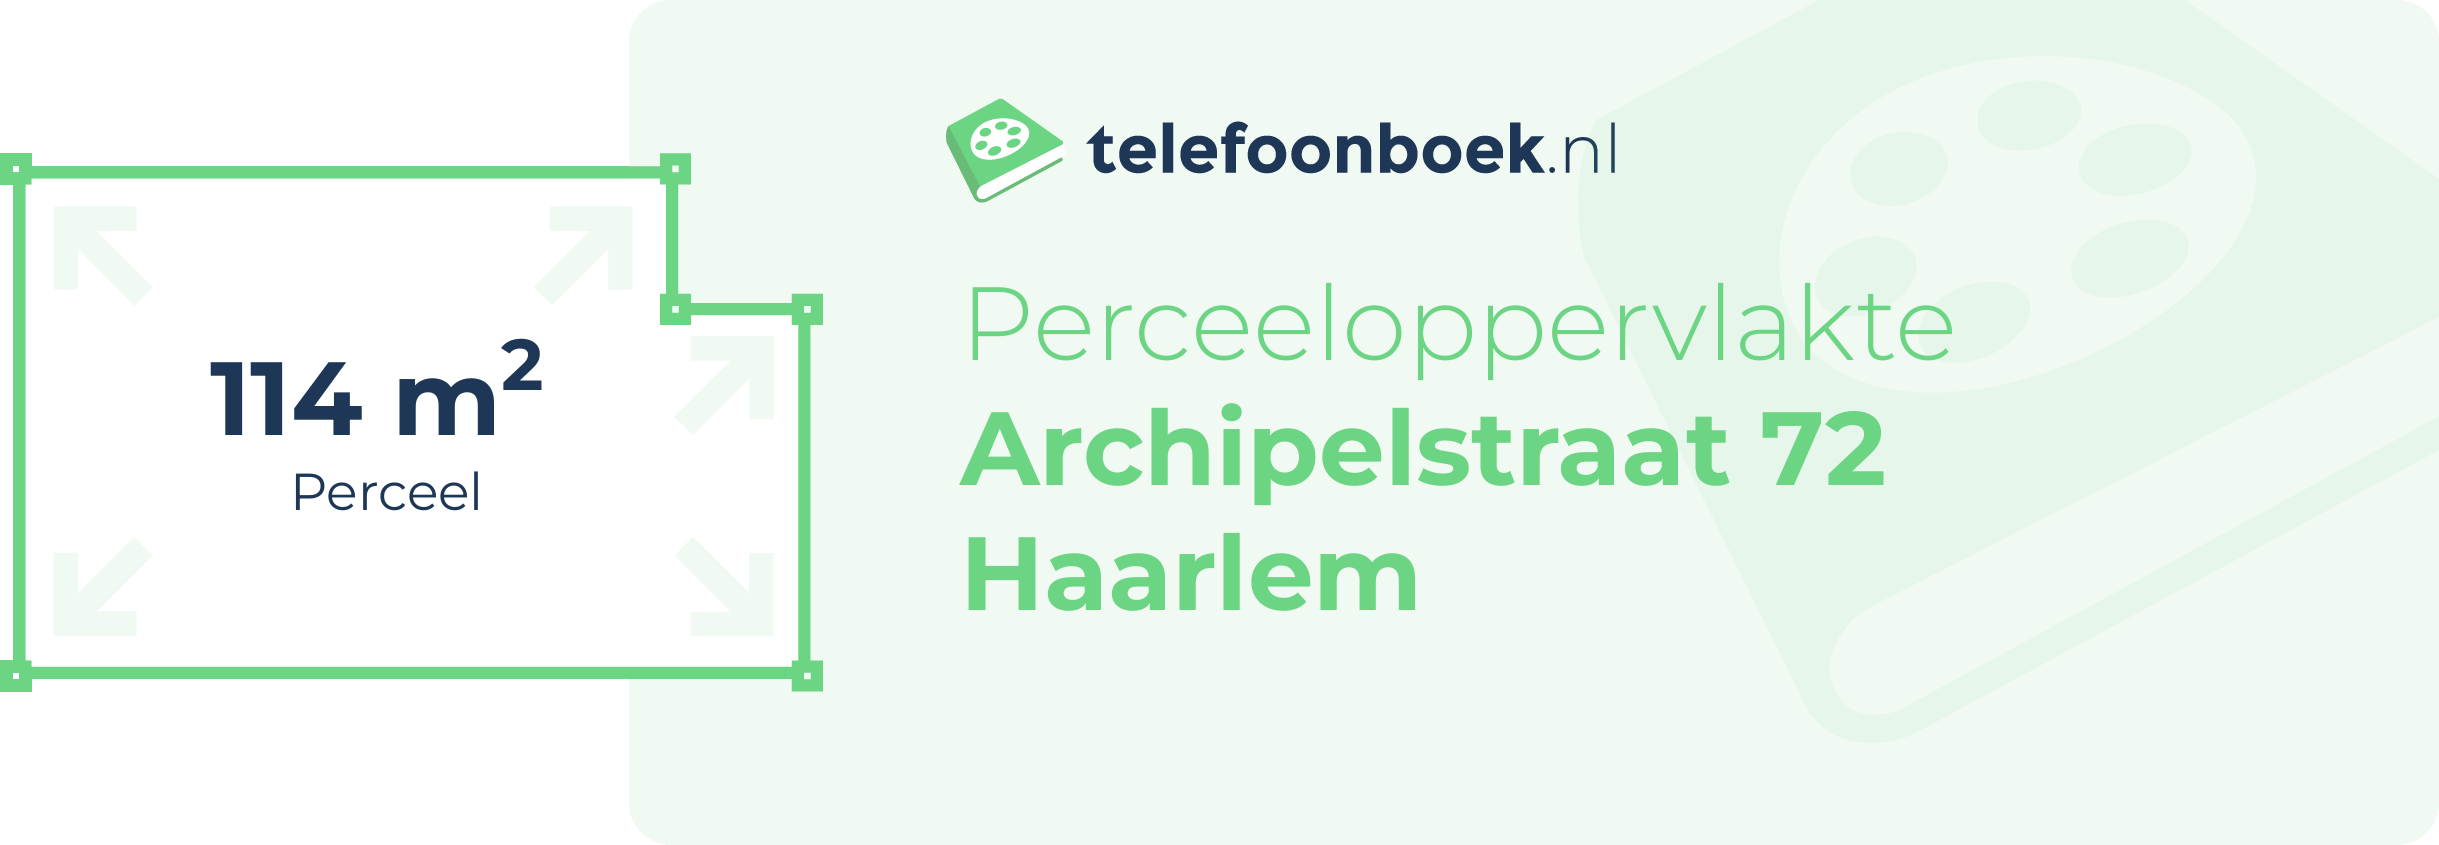 Perceeloppervlakte Archipelstraat 72 Haarlem